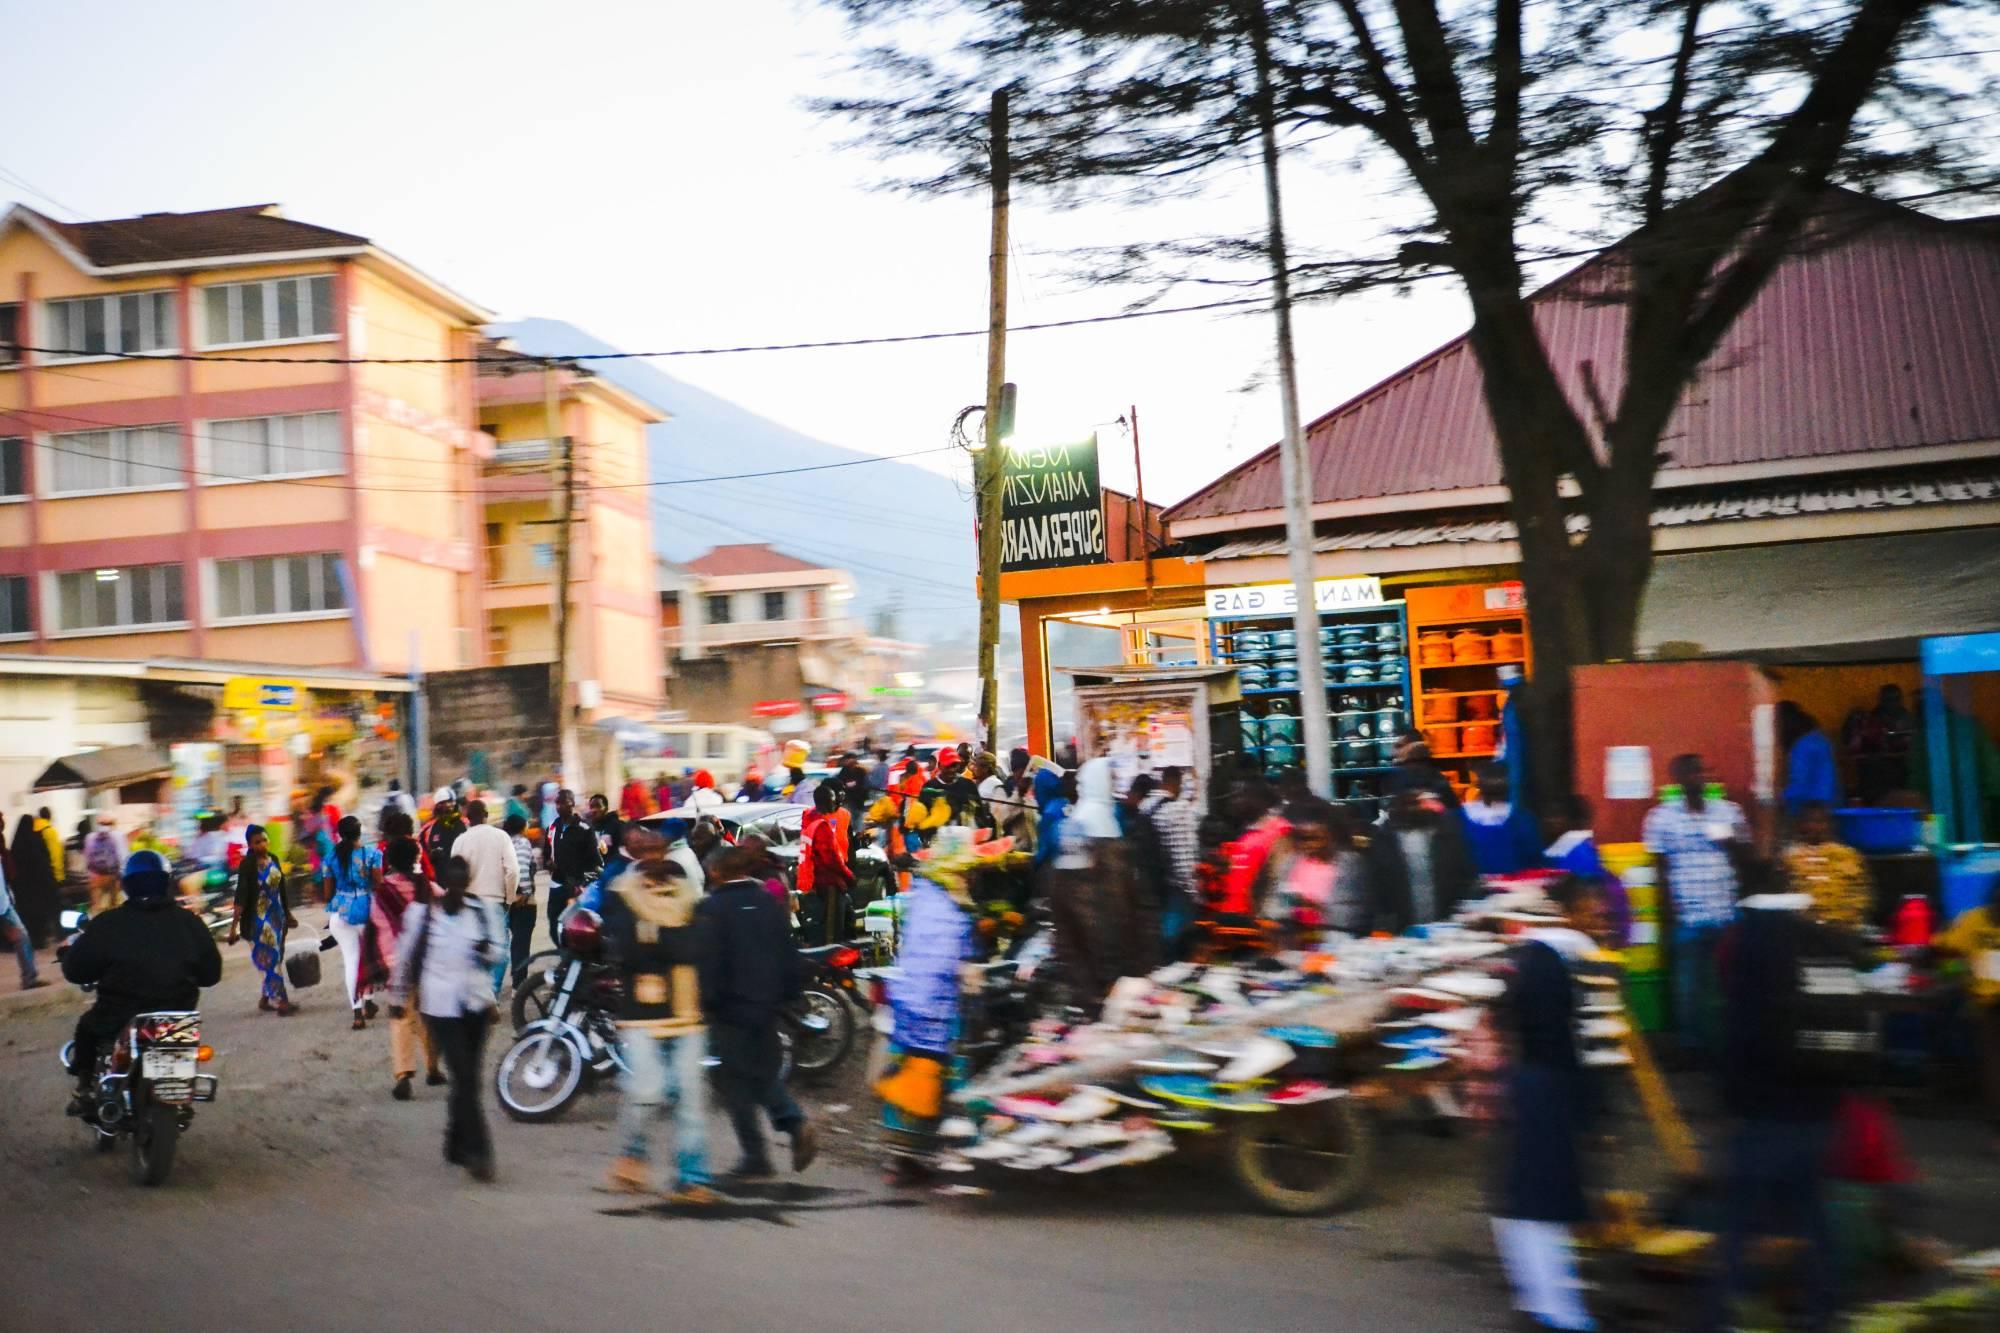 A busy city scene from Arusha, Tanzania.